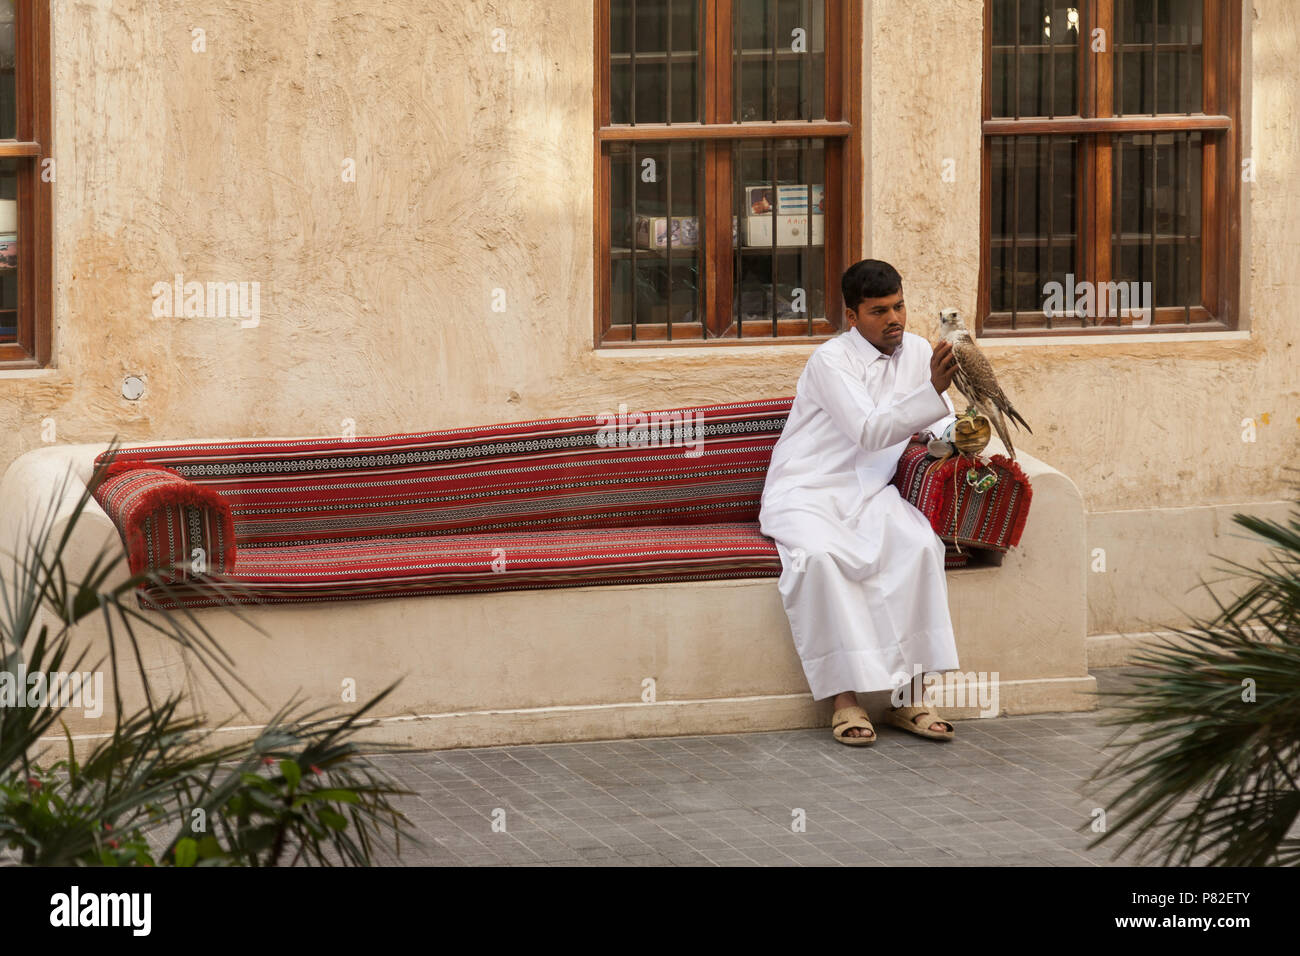 Young man holding a falcon in Souq Waqif, Doha, Qatar Stock Photo